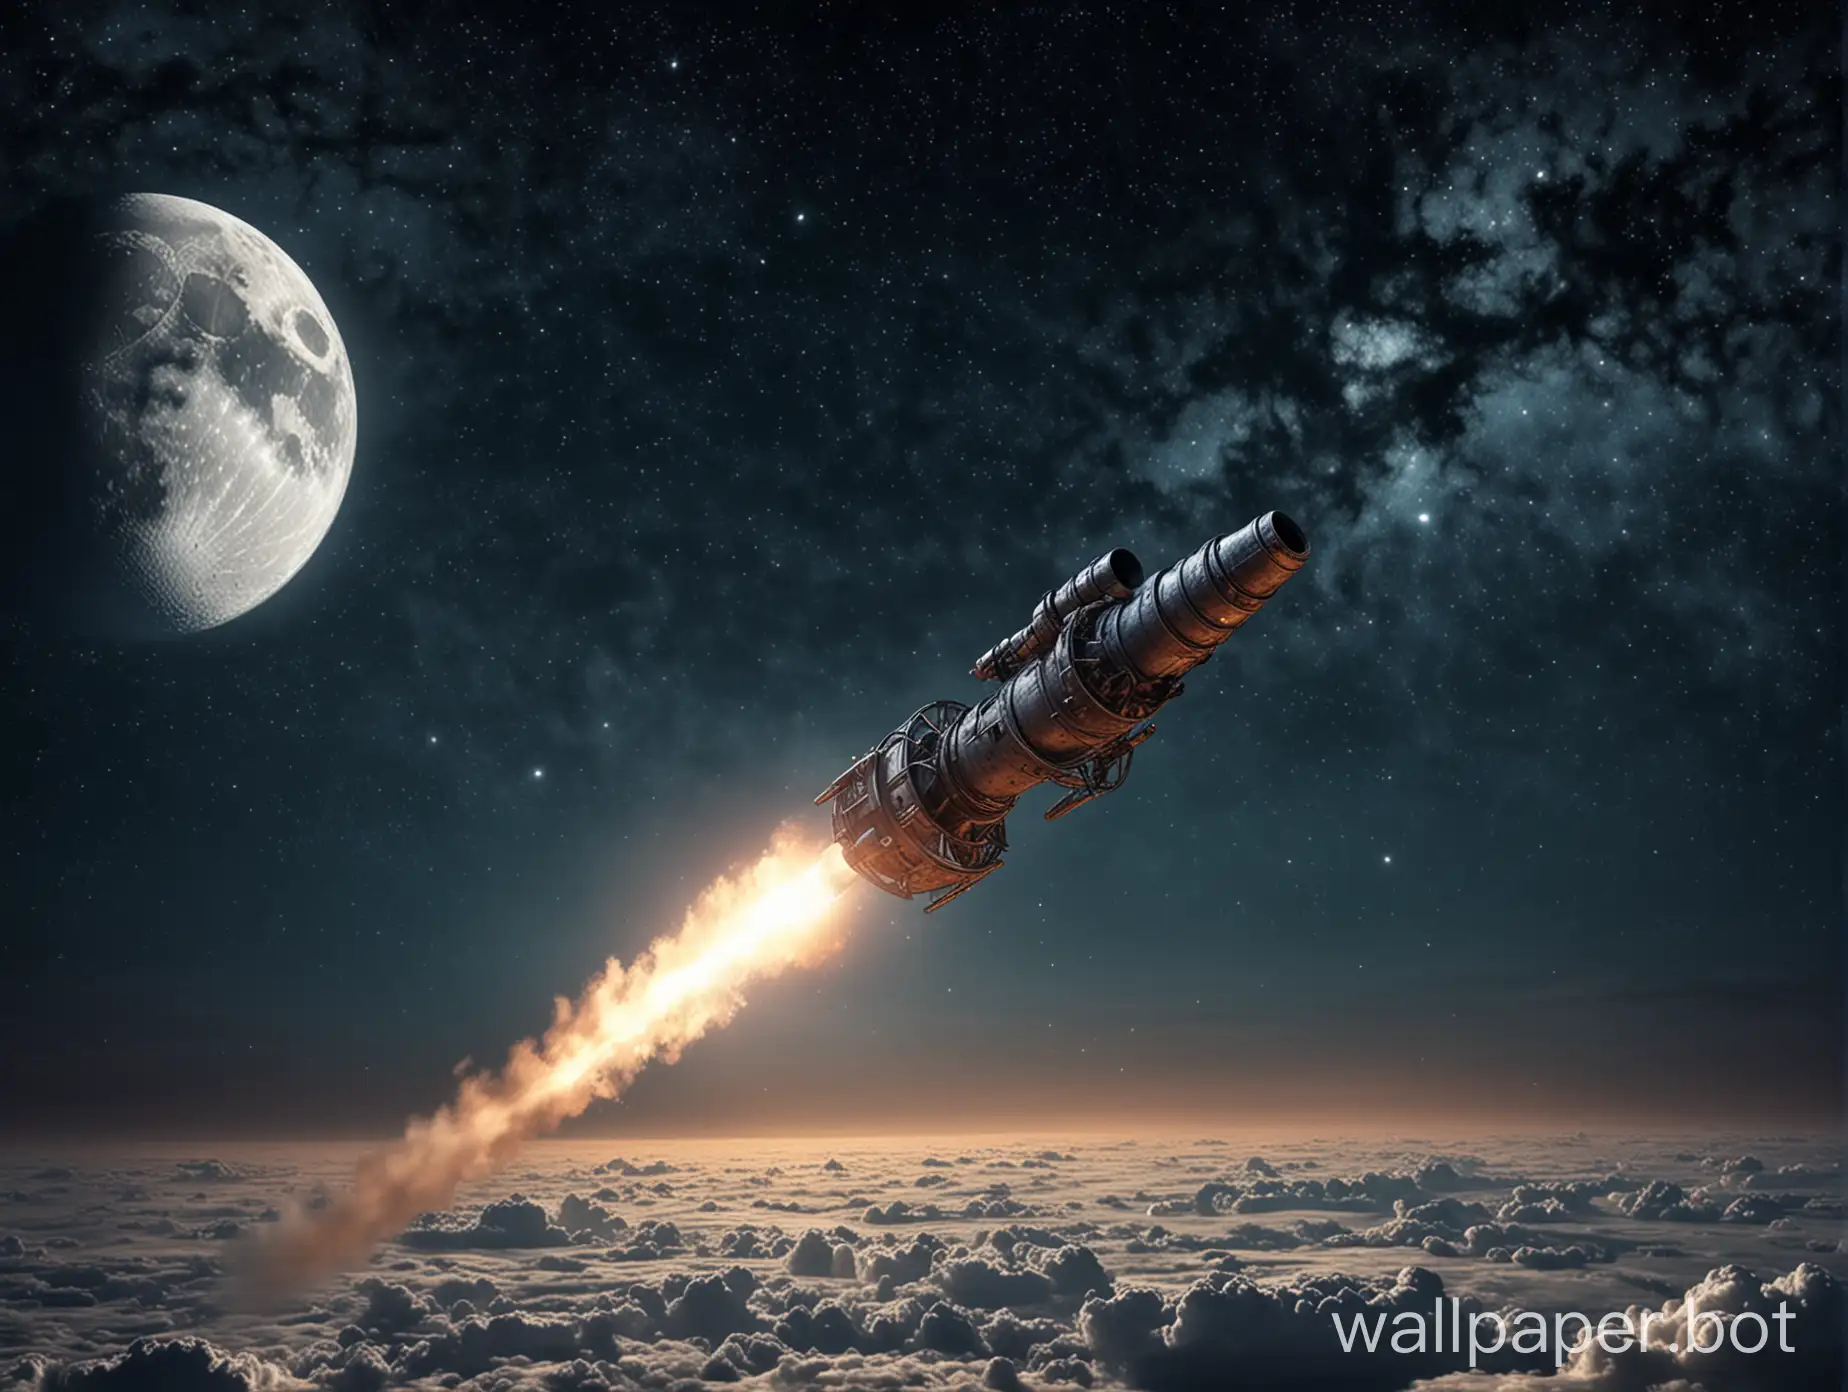 полет из пушки на луну по ночному небу, в жанре научная фантастика